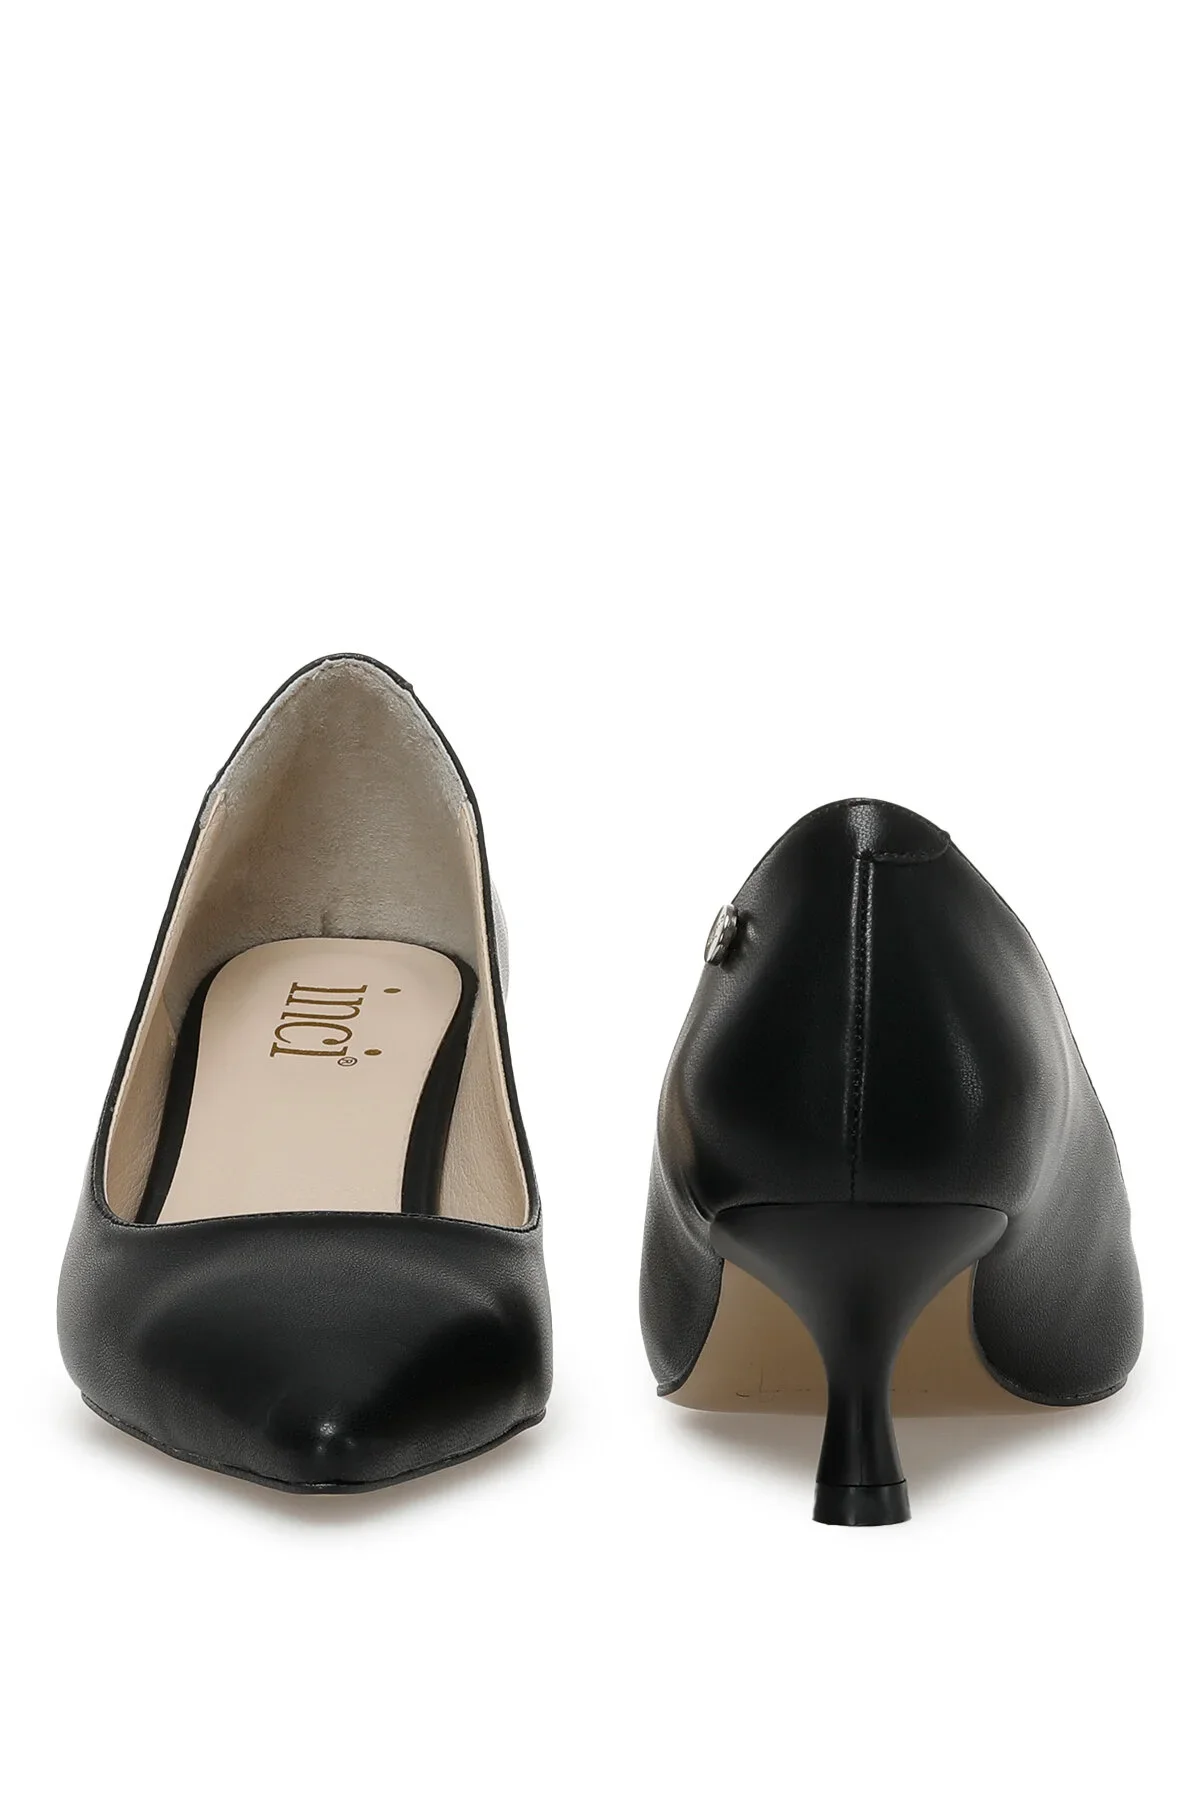 TRUDY 3FX Kadın Topuklu Ayakkabı-Siyah - 5